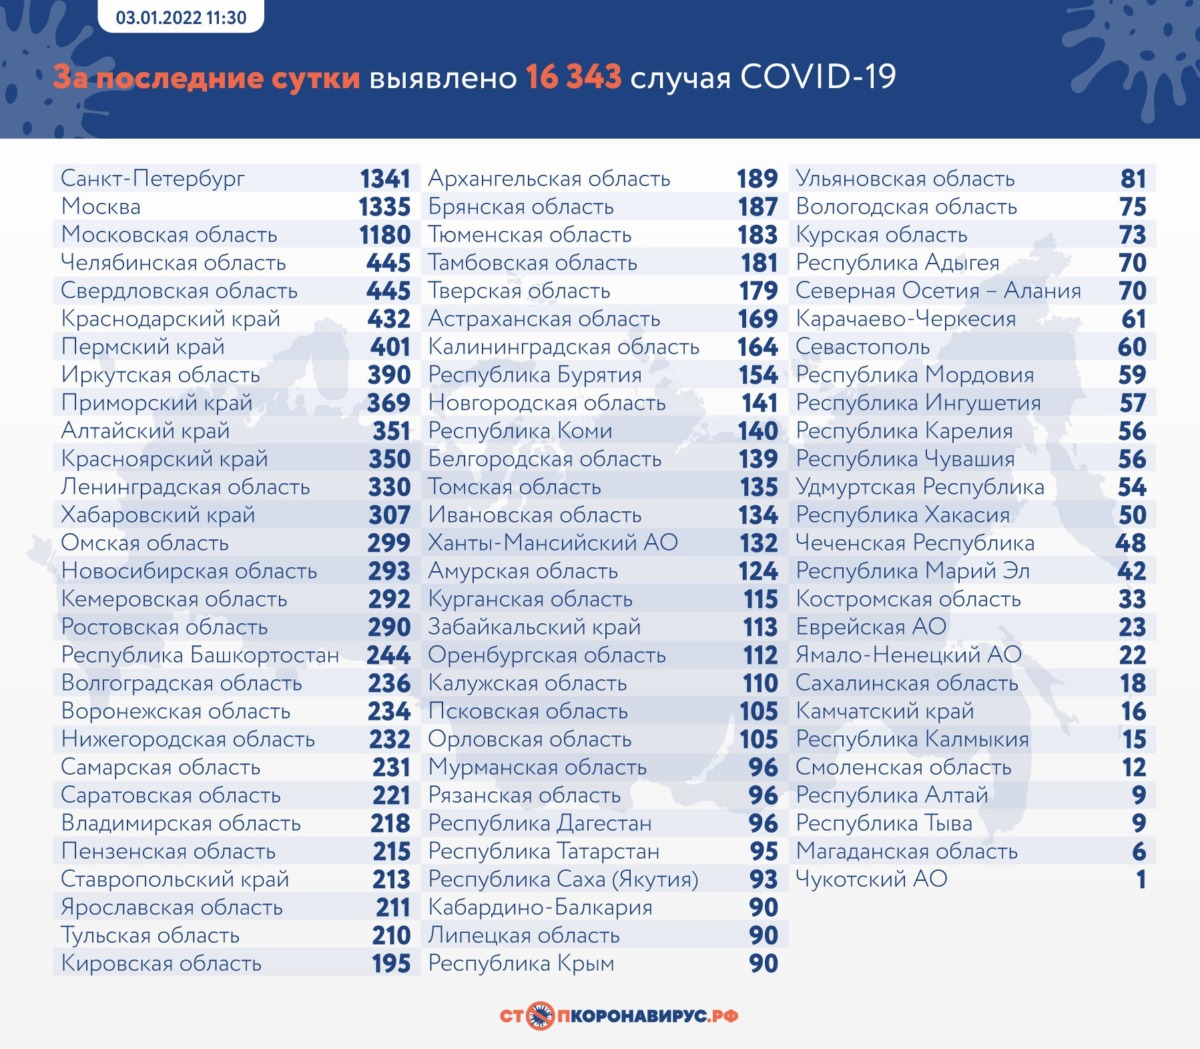 Статистика коронавируса в России на 3 января